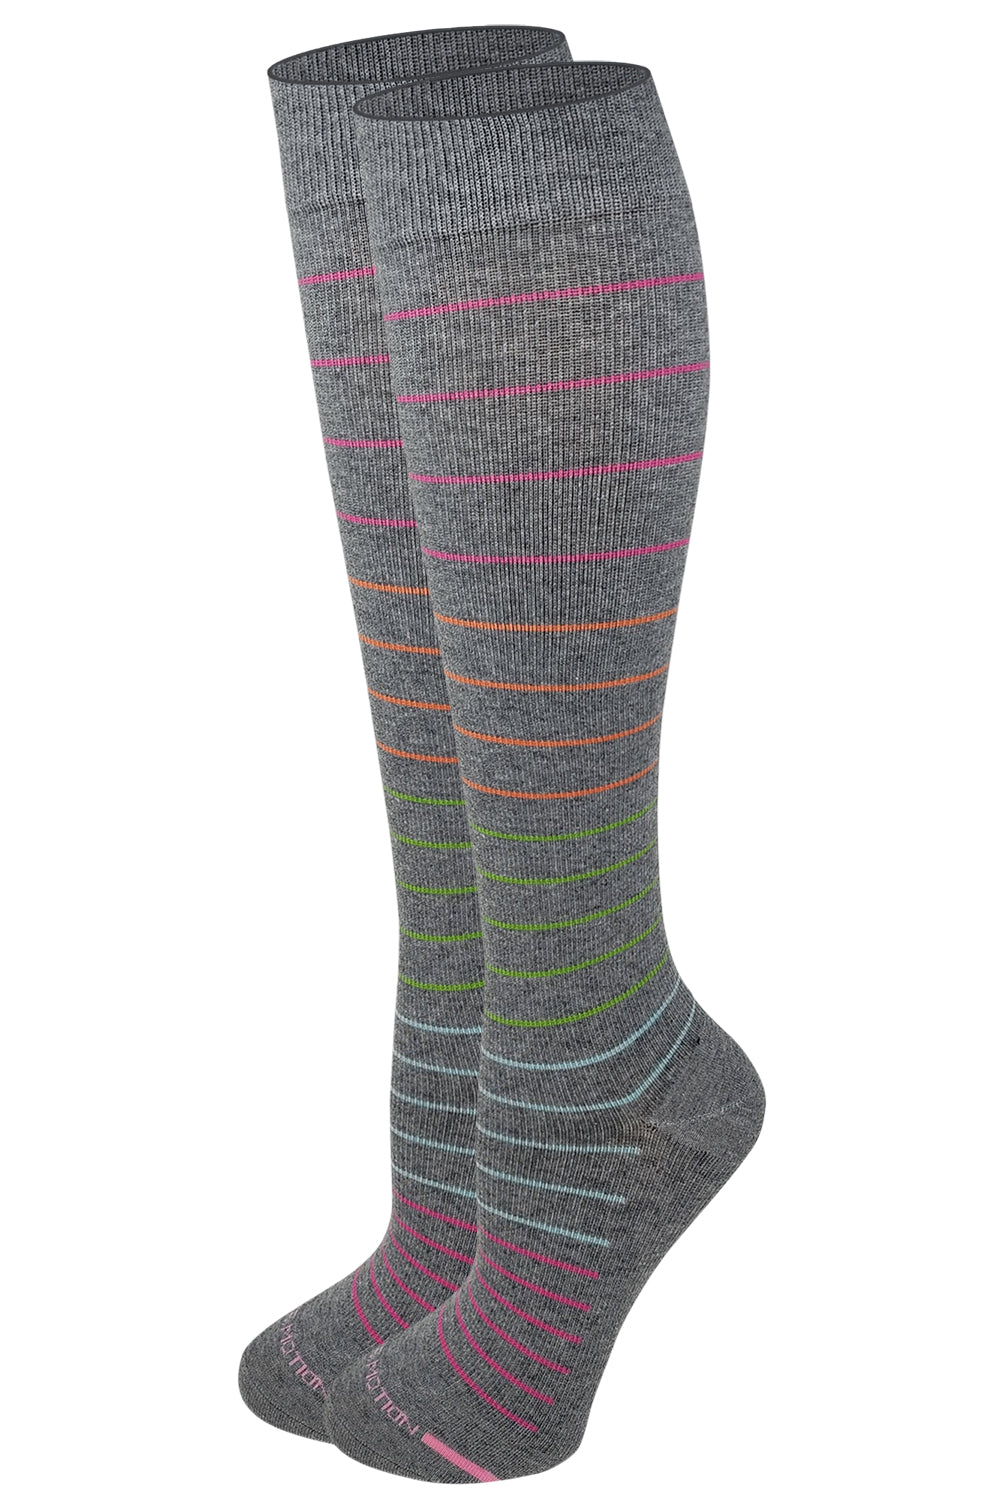 Knee High Compression Socks | Pin Stripes | Women's (1 Pair)